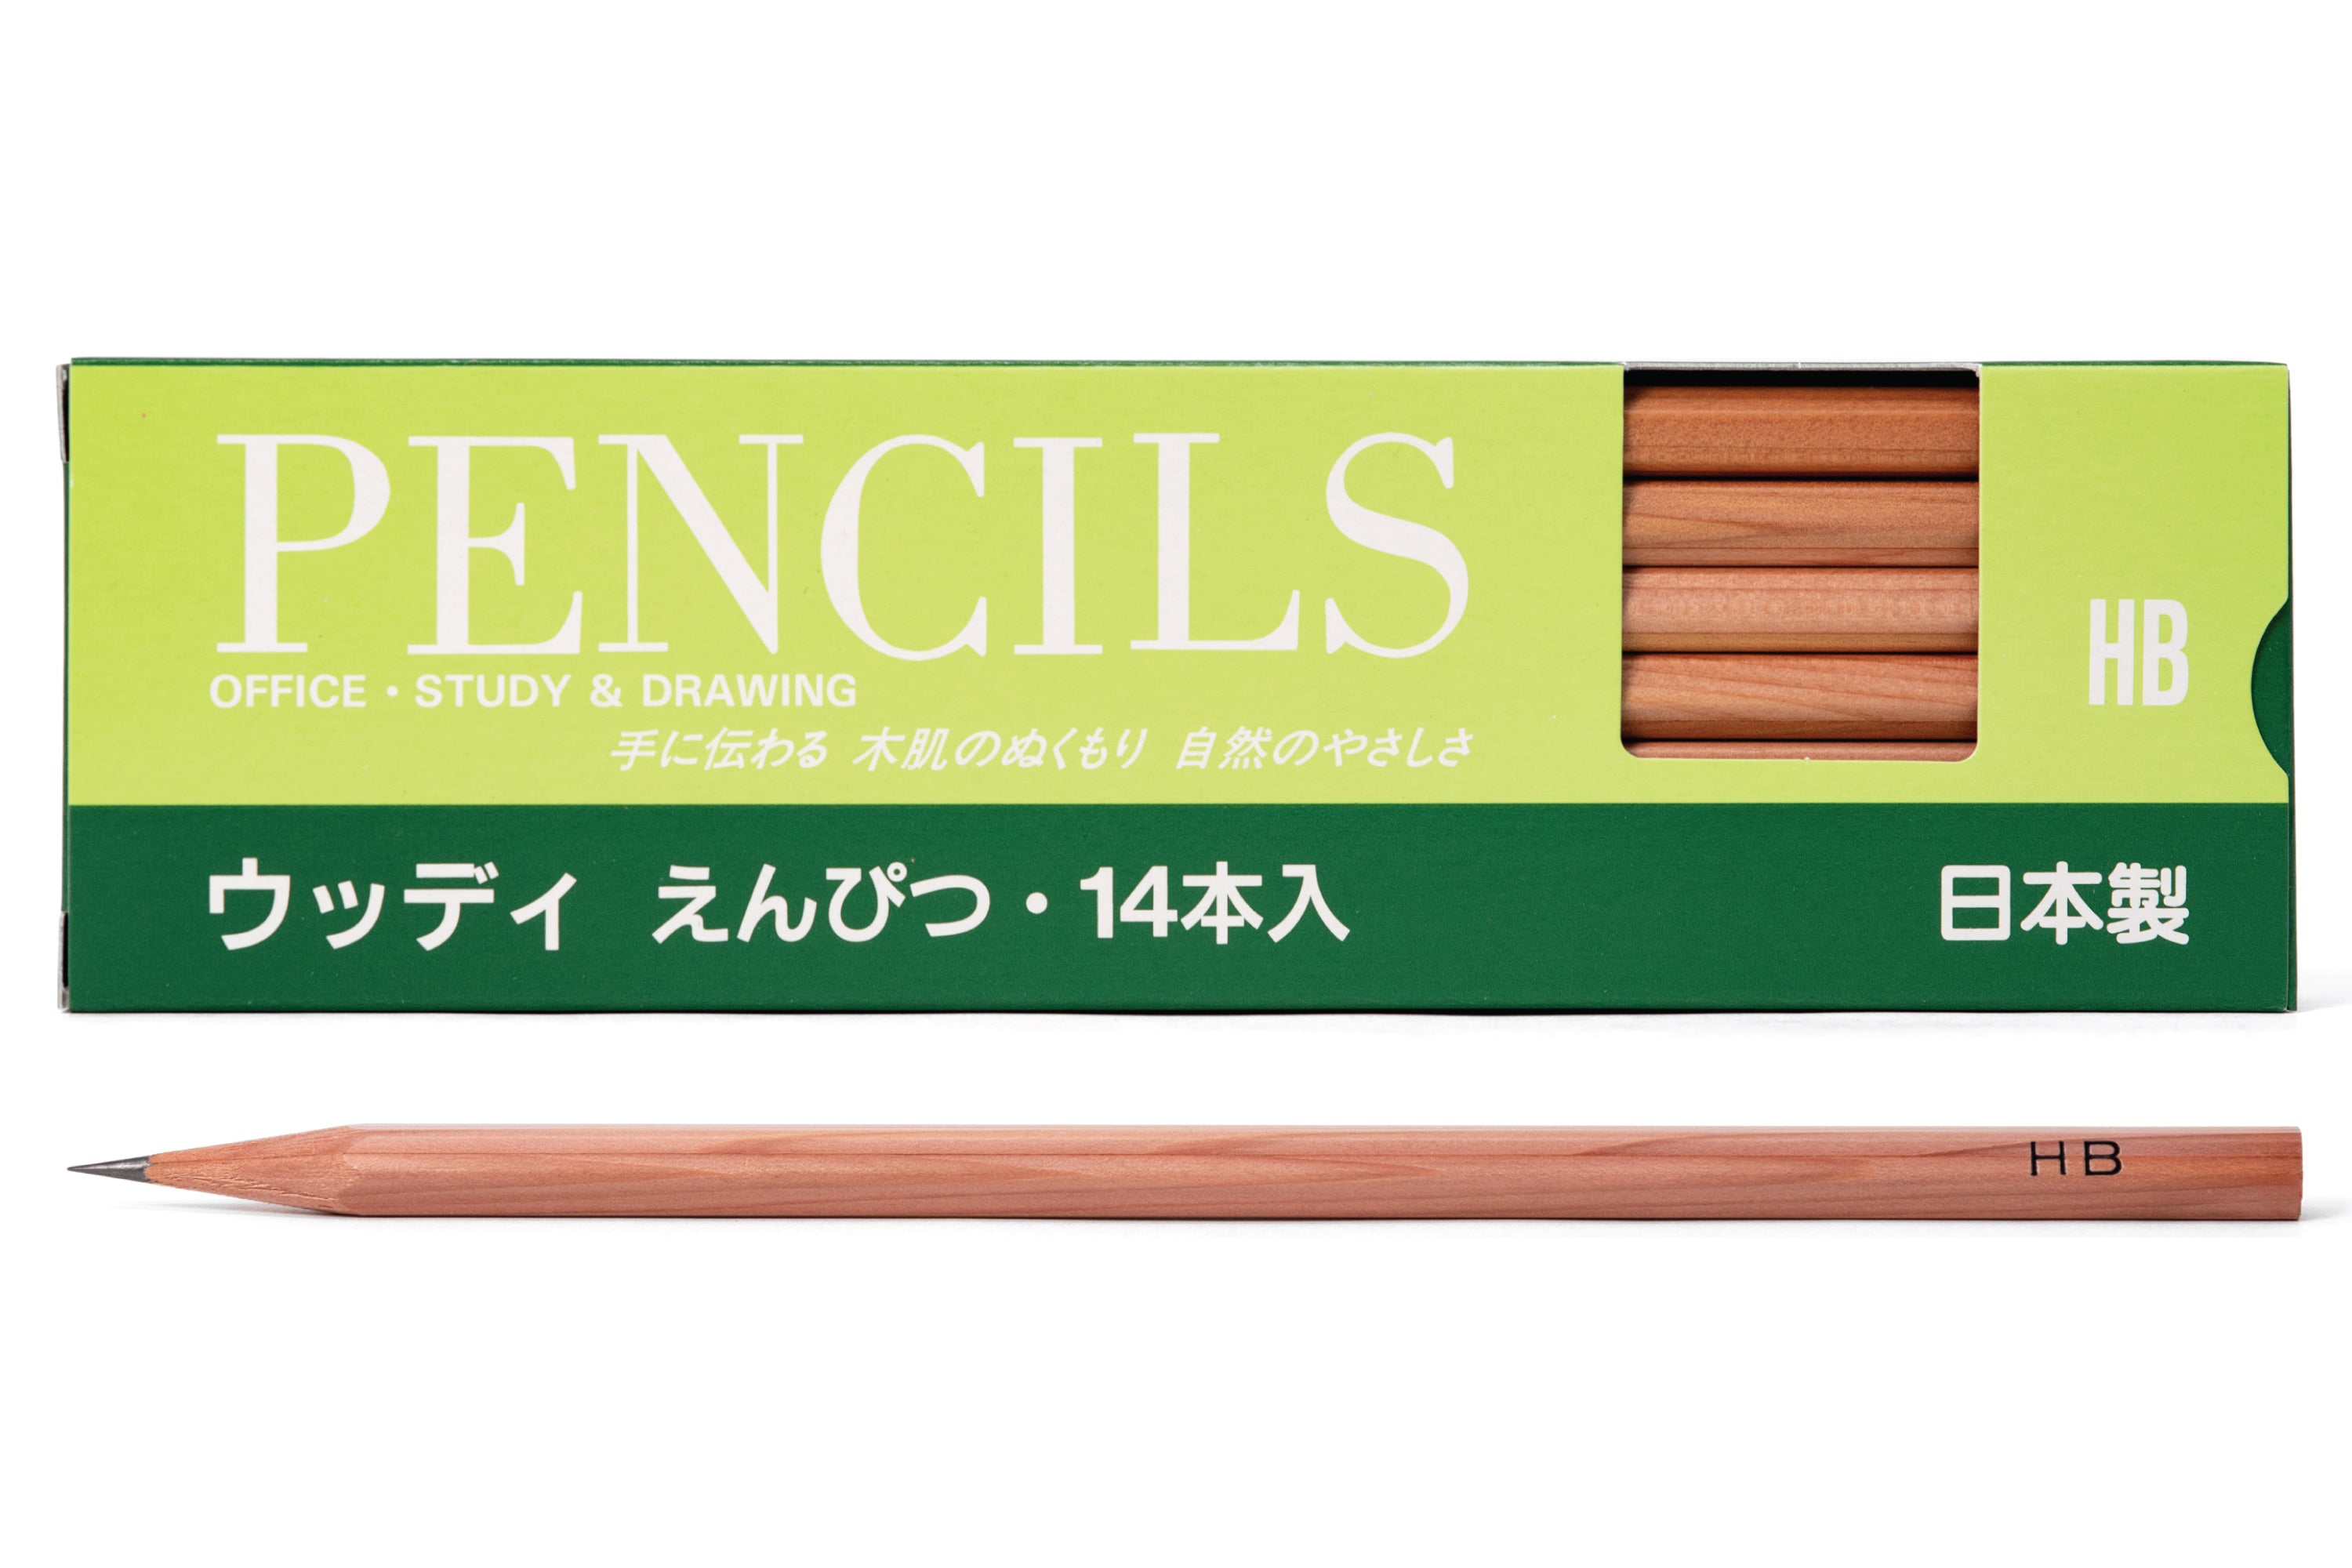 Kitaboshi HB Pencils